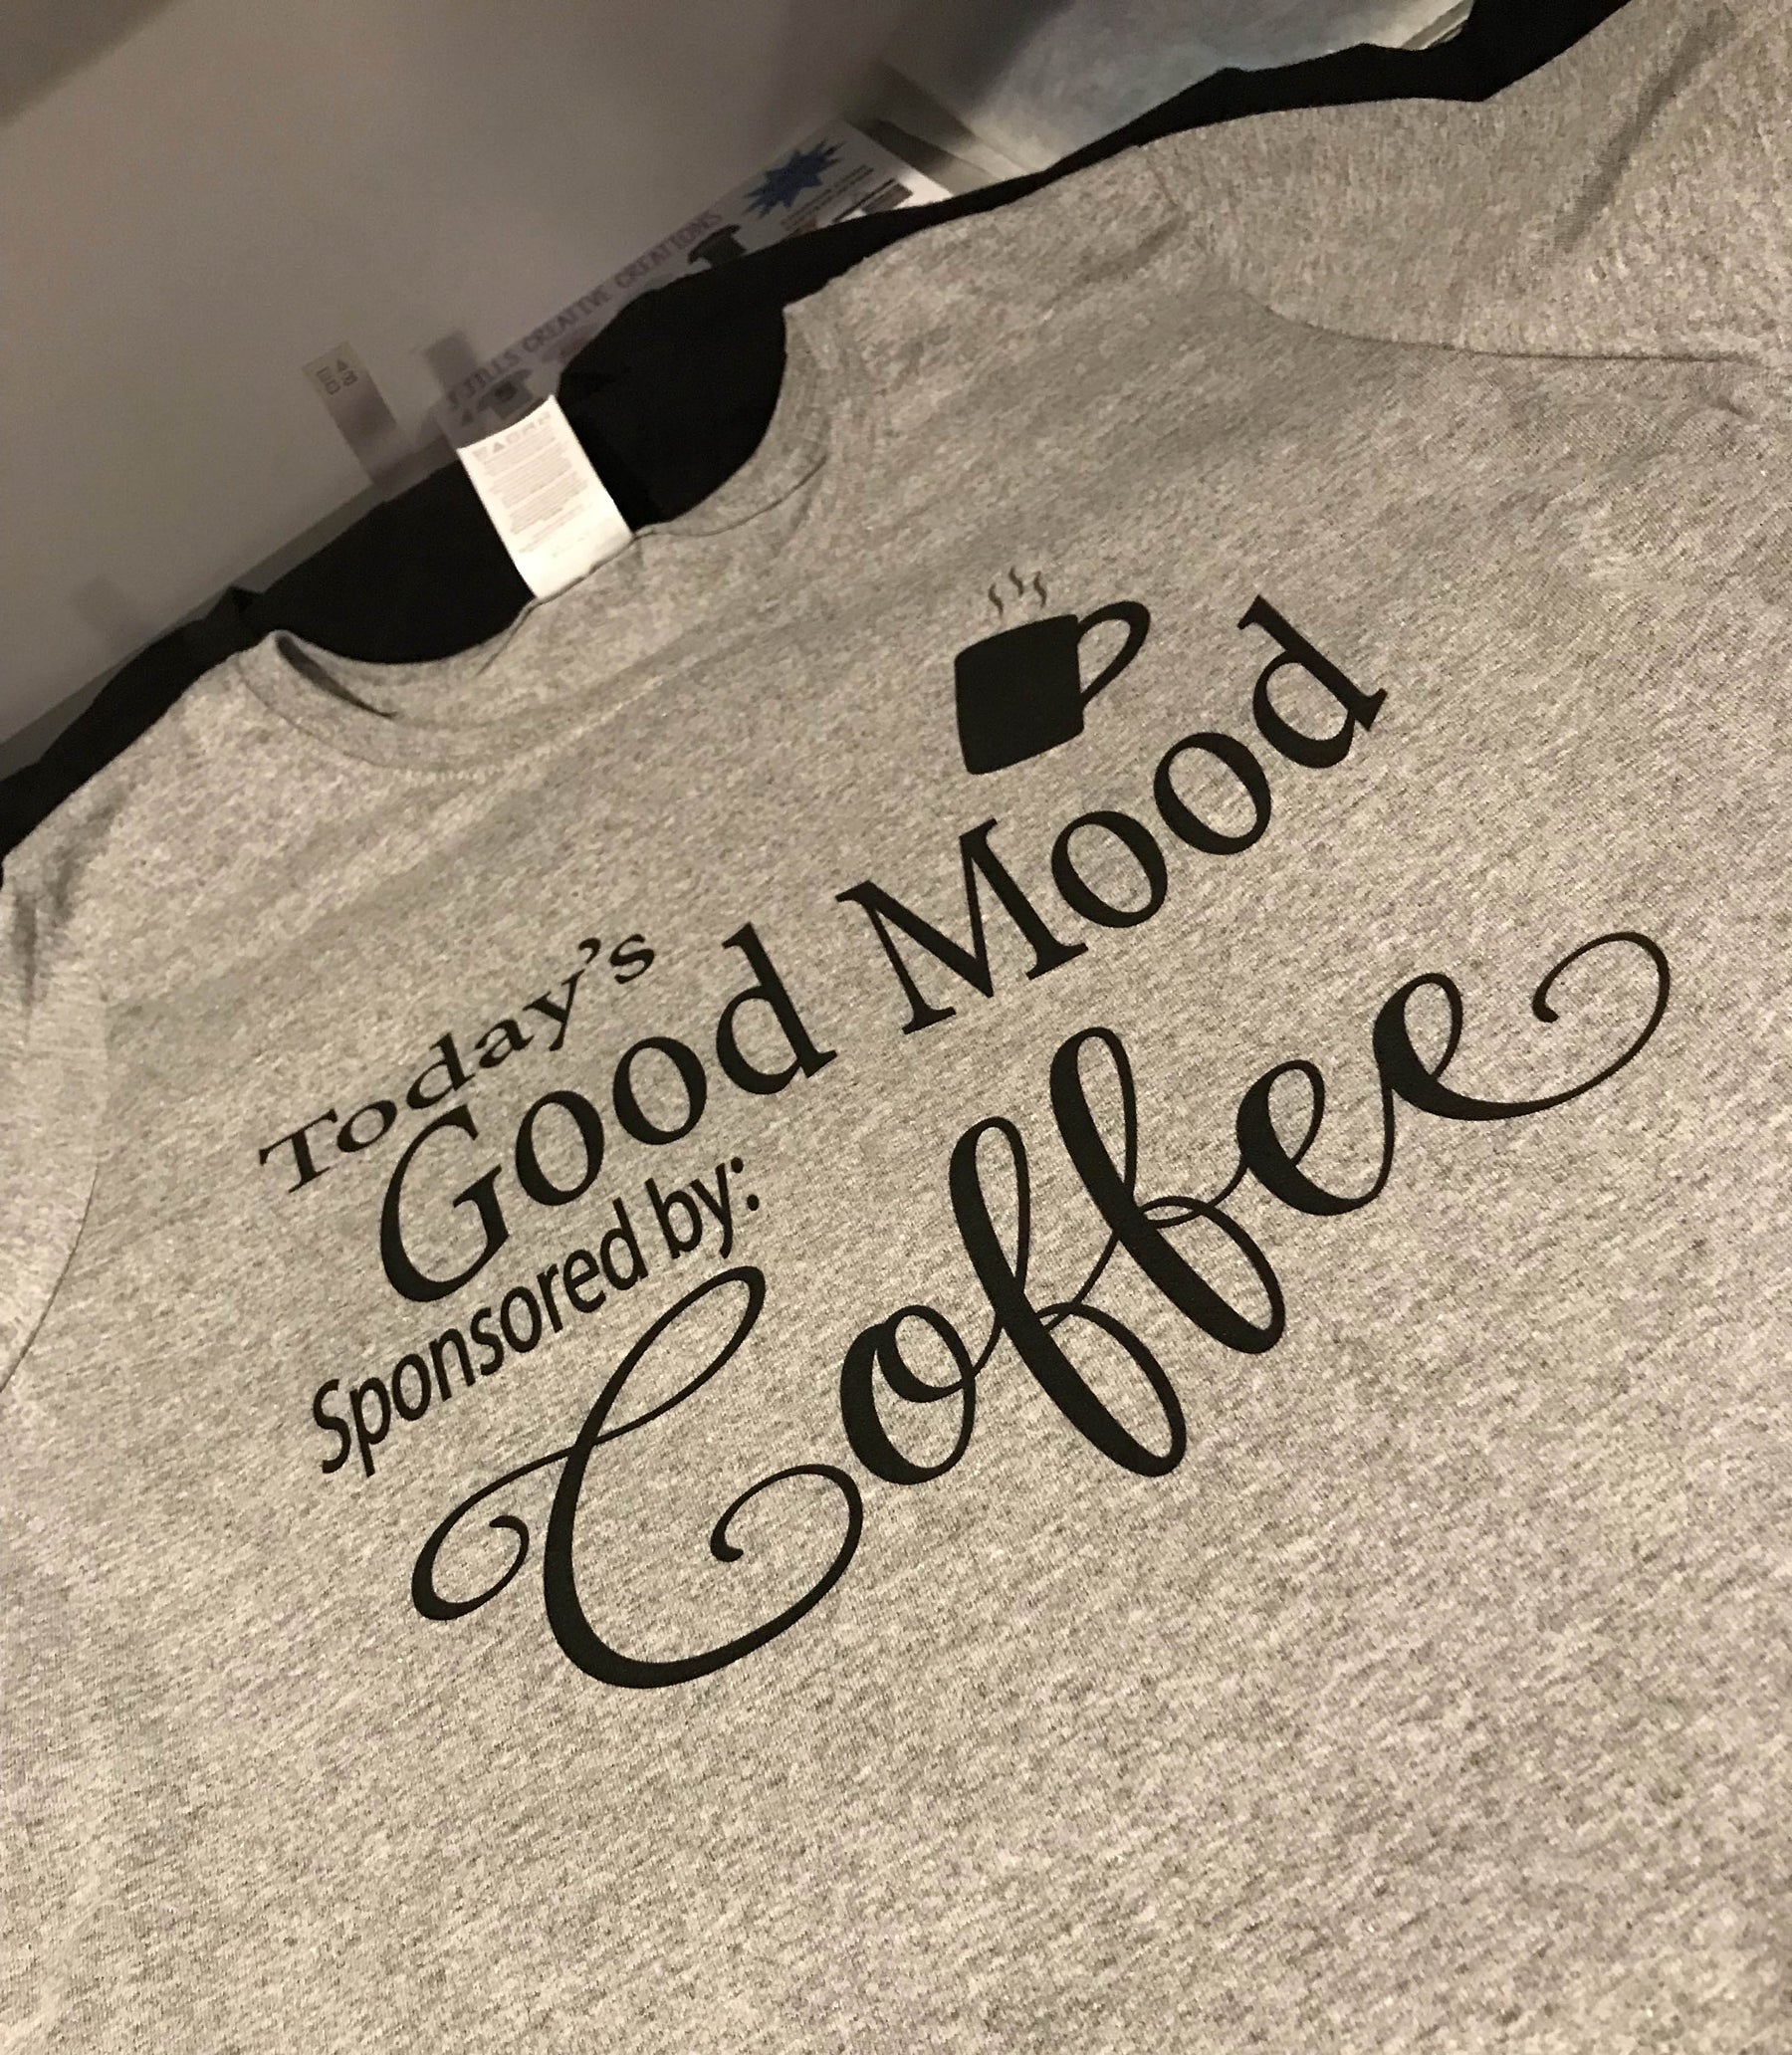 Good mood sponsored by Coffee, Coffee t-shirt